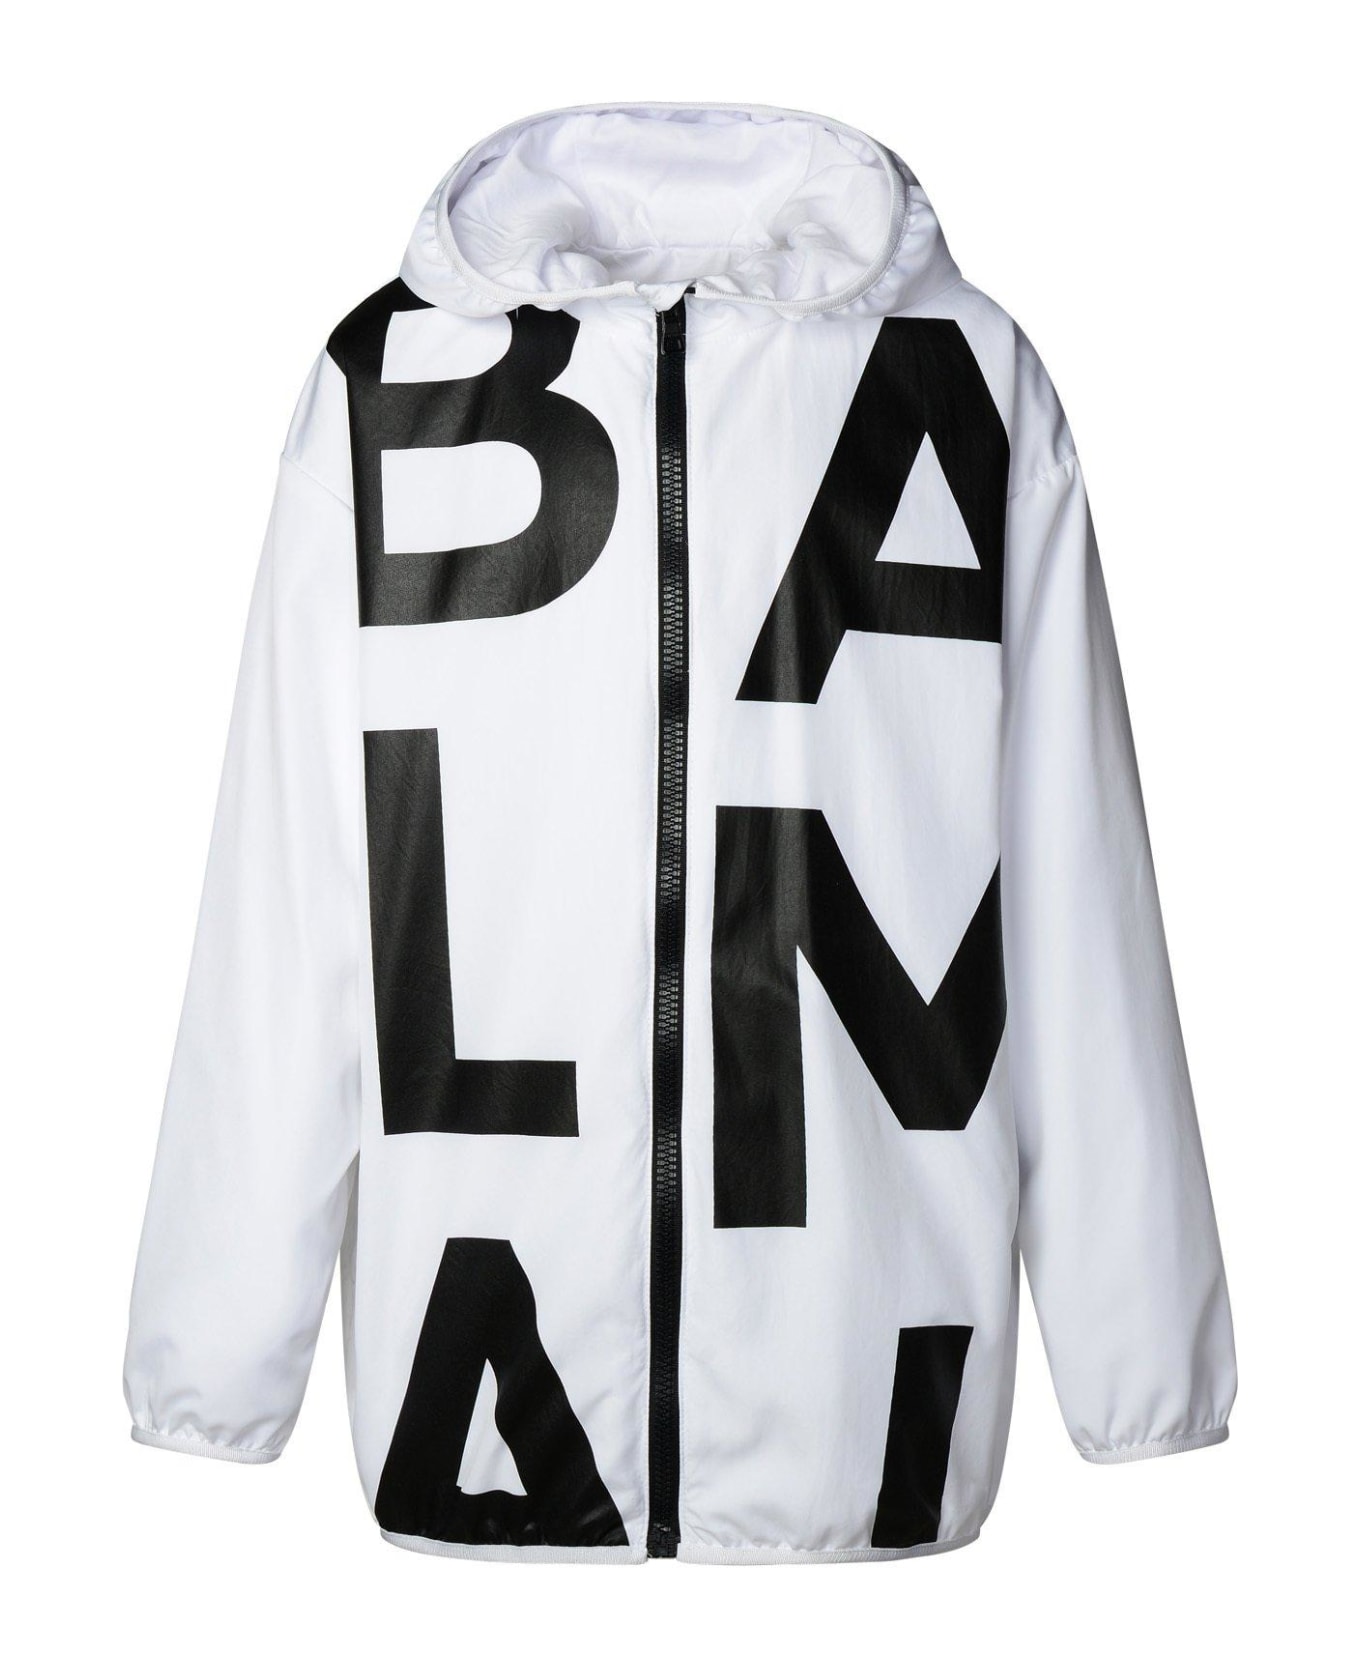 Balmain Logo Printed Hooded Jacket - White/black